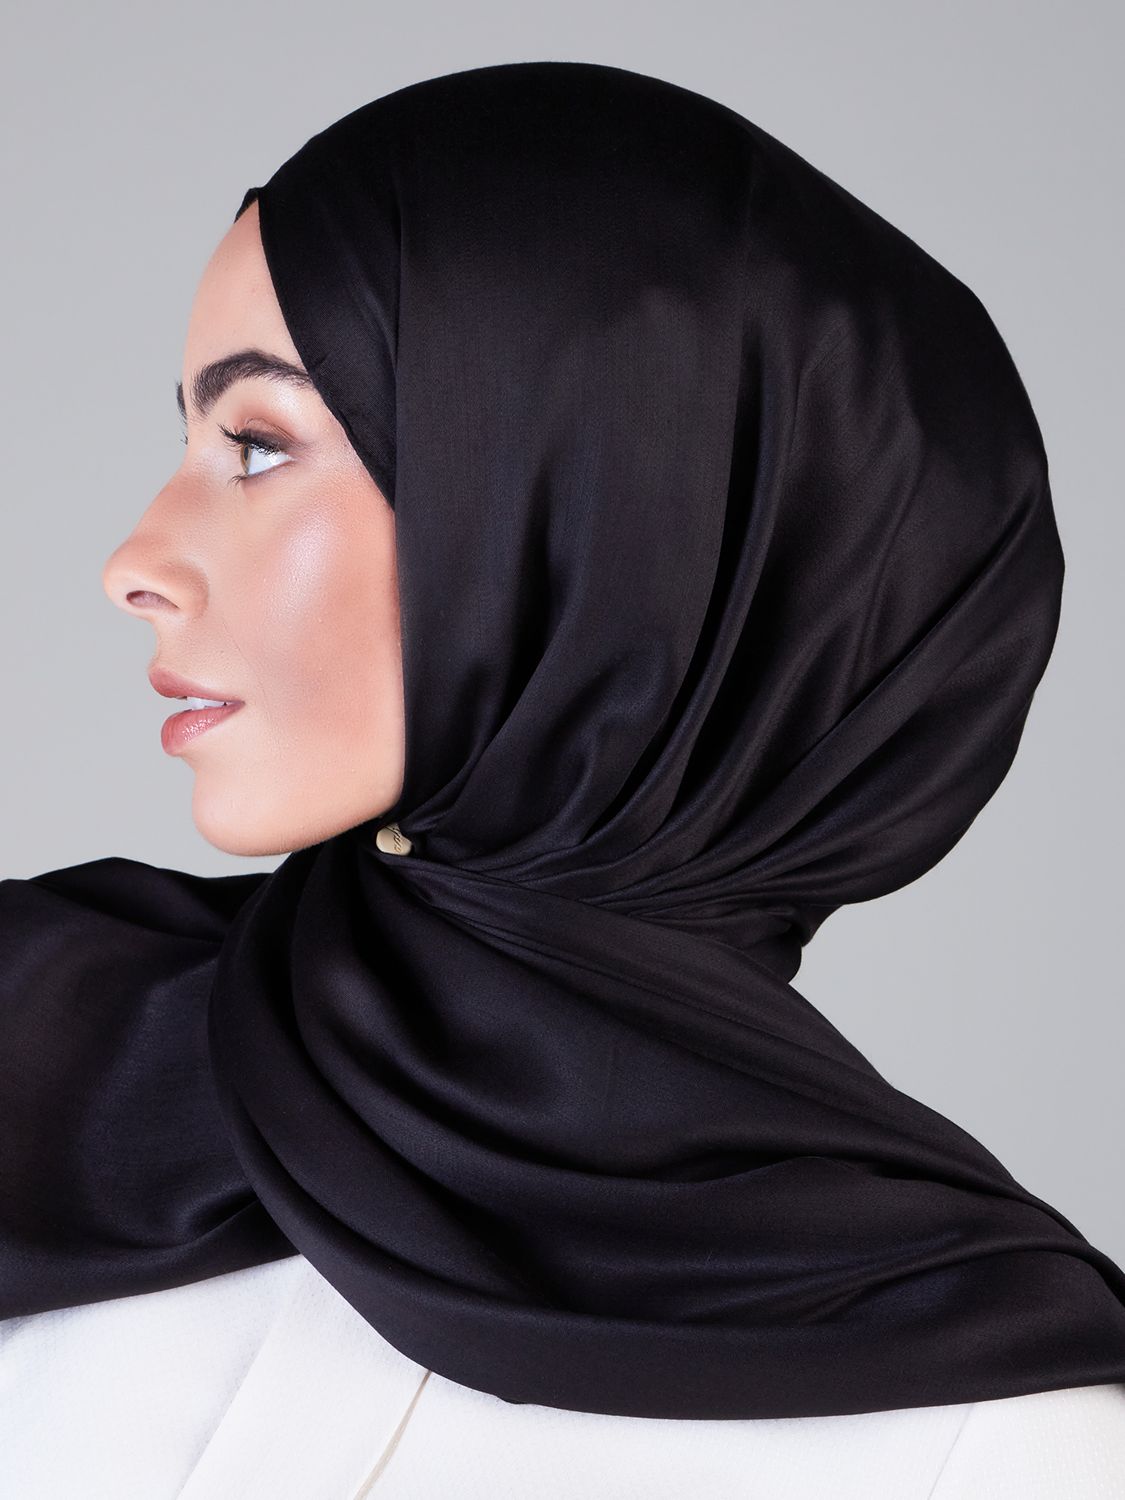 Aab Aloe Vera Hijab, Black, One Size